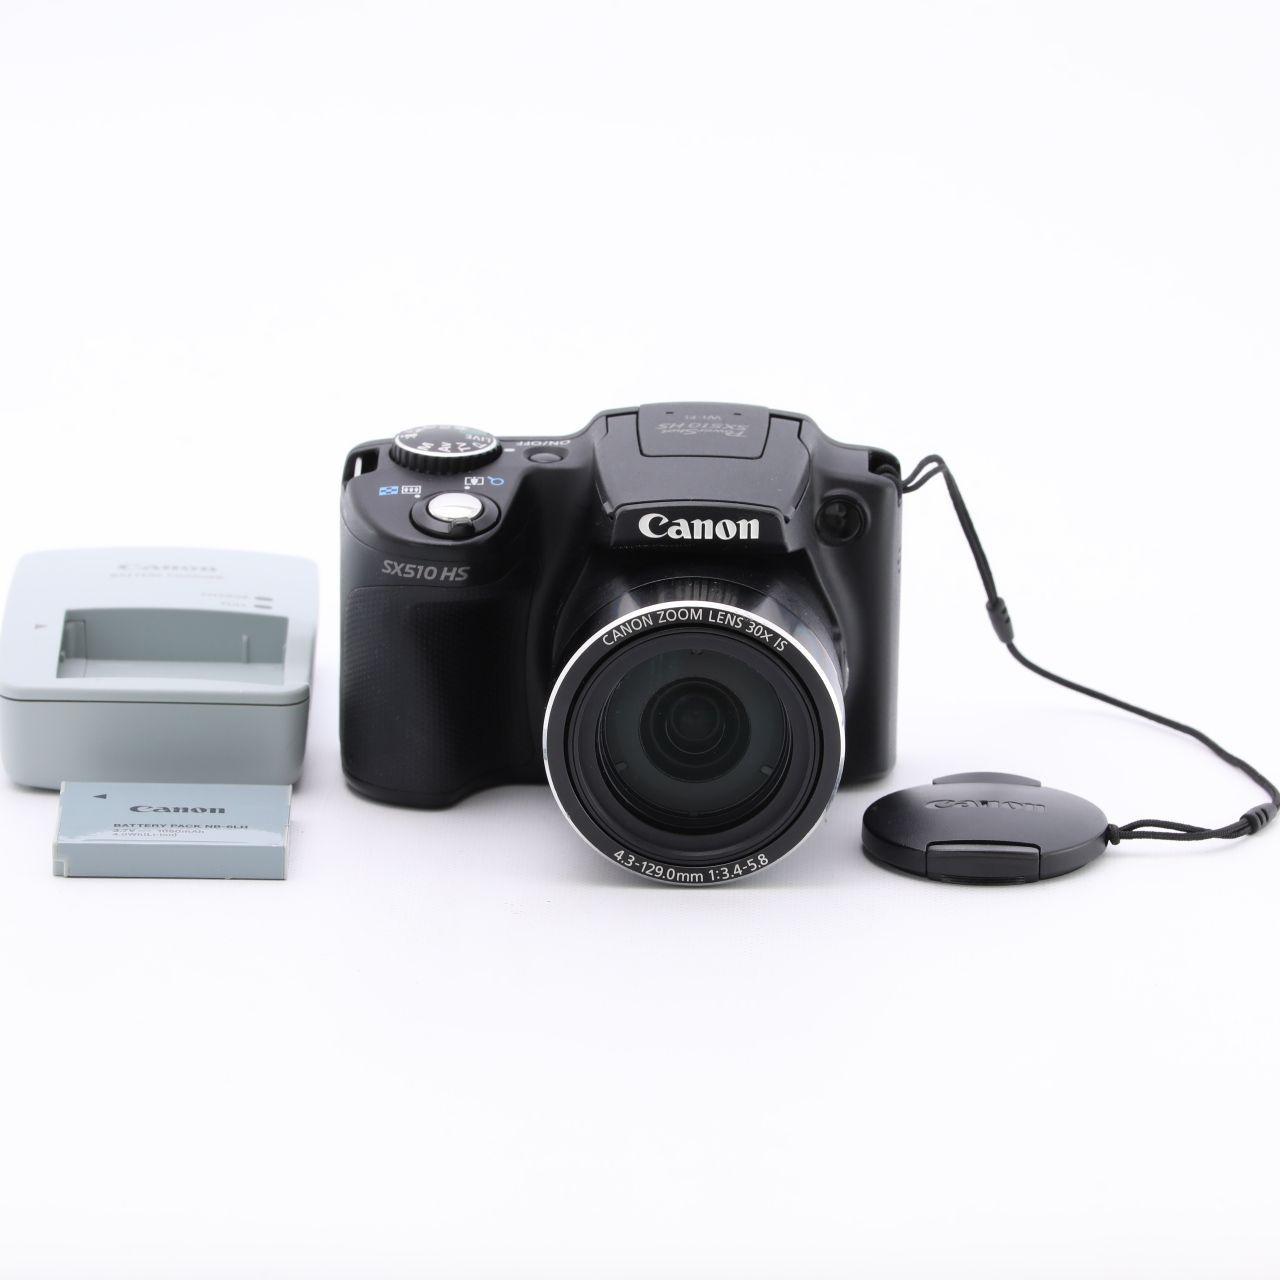 Canon キヤノン デジタルカメラ PowerShot SX510 HS - メルカリ